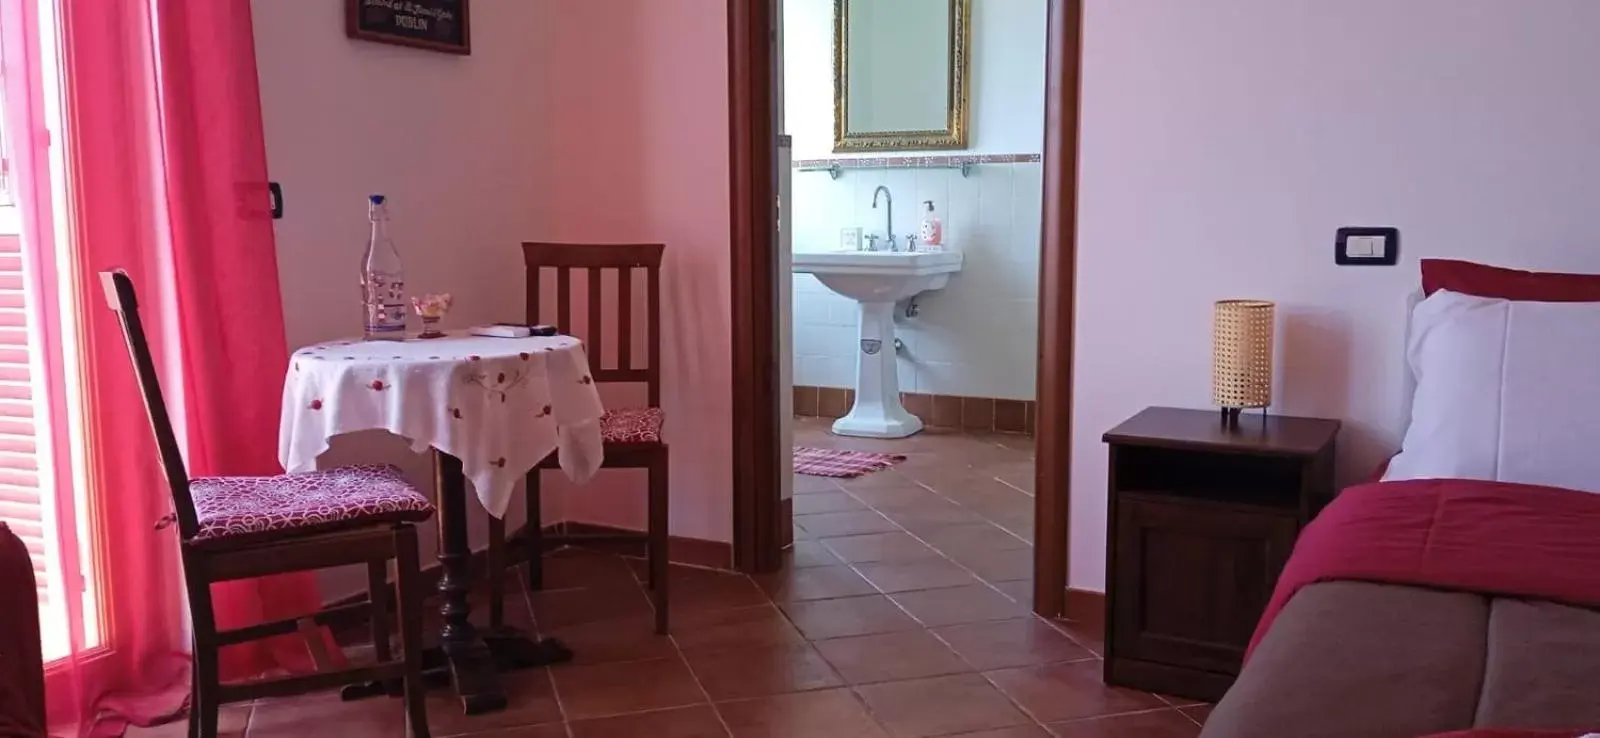 Dining Area in In Vino Veritas